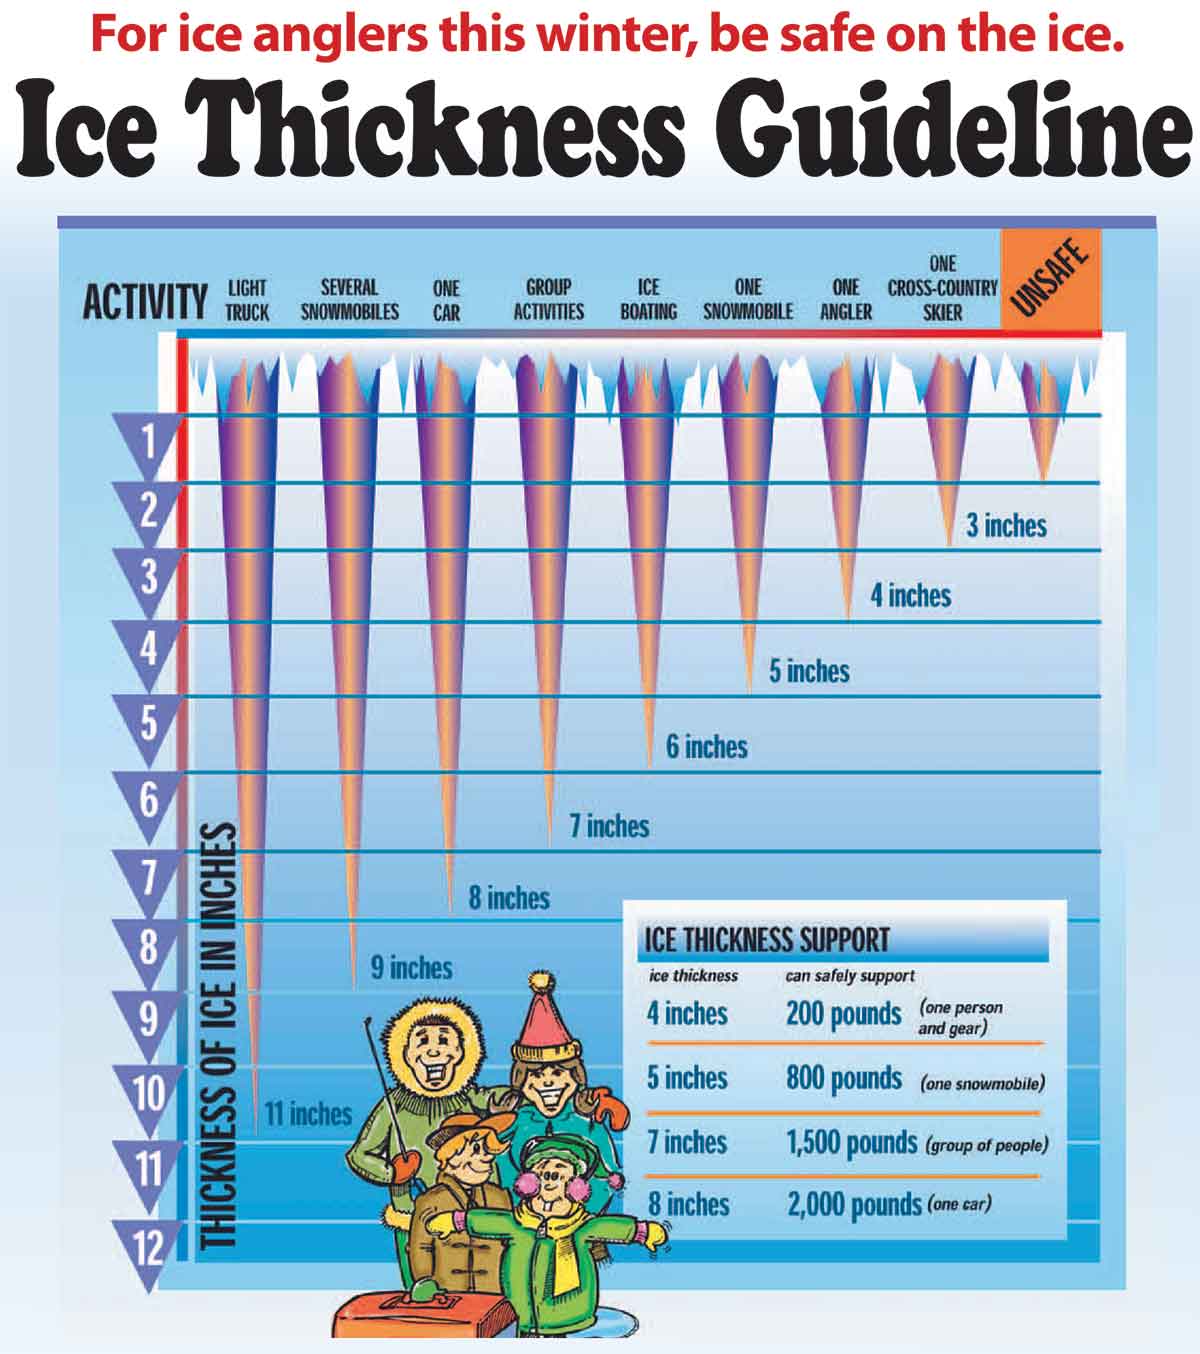 Always think ice fishing safety.